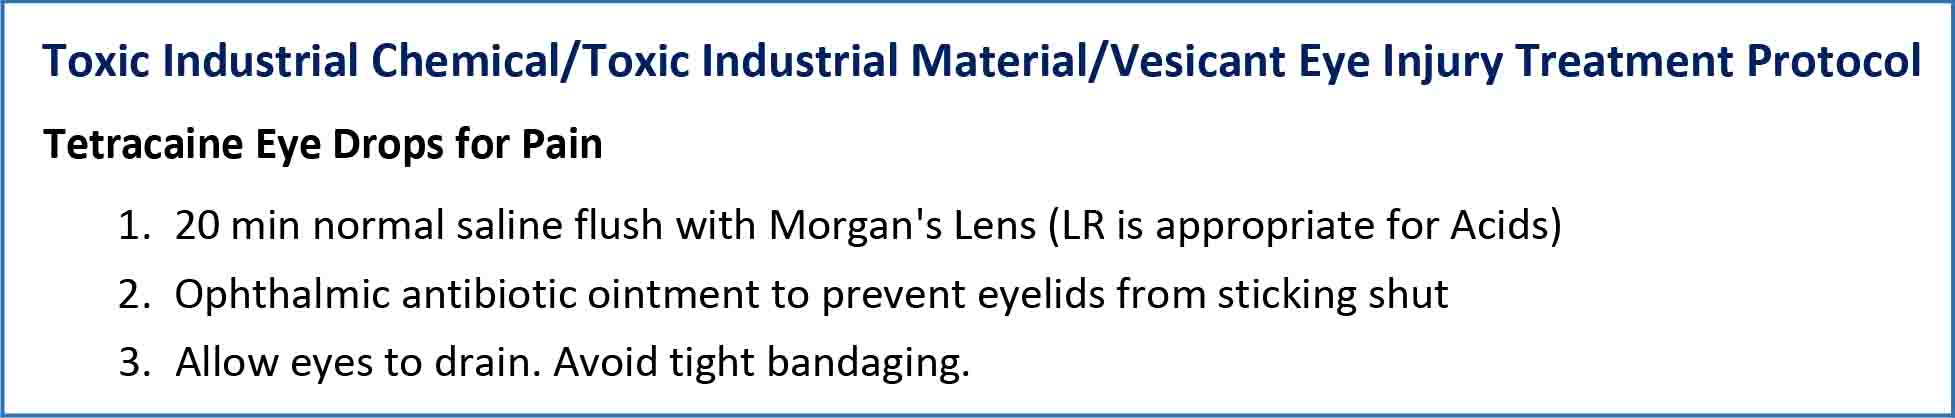 Eye Injury Treatment Protocol